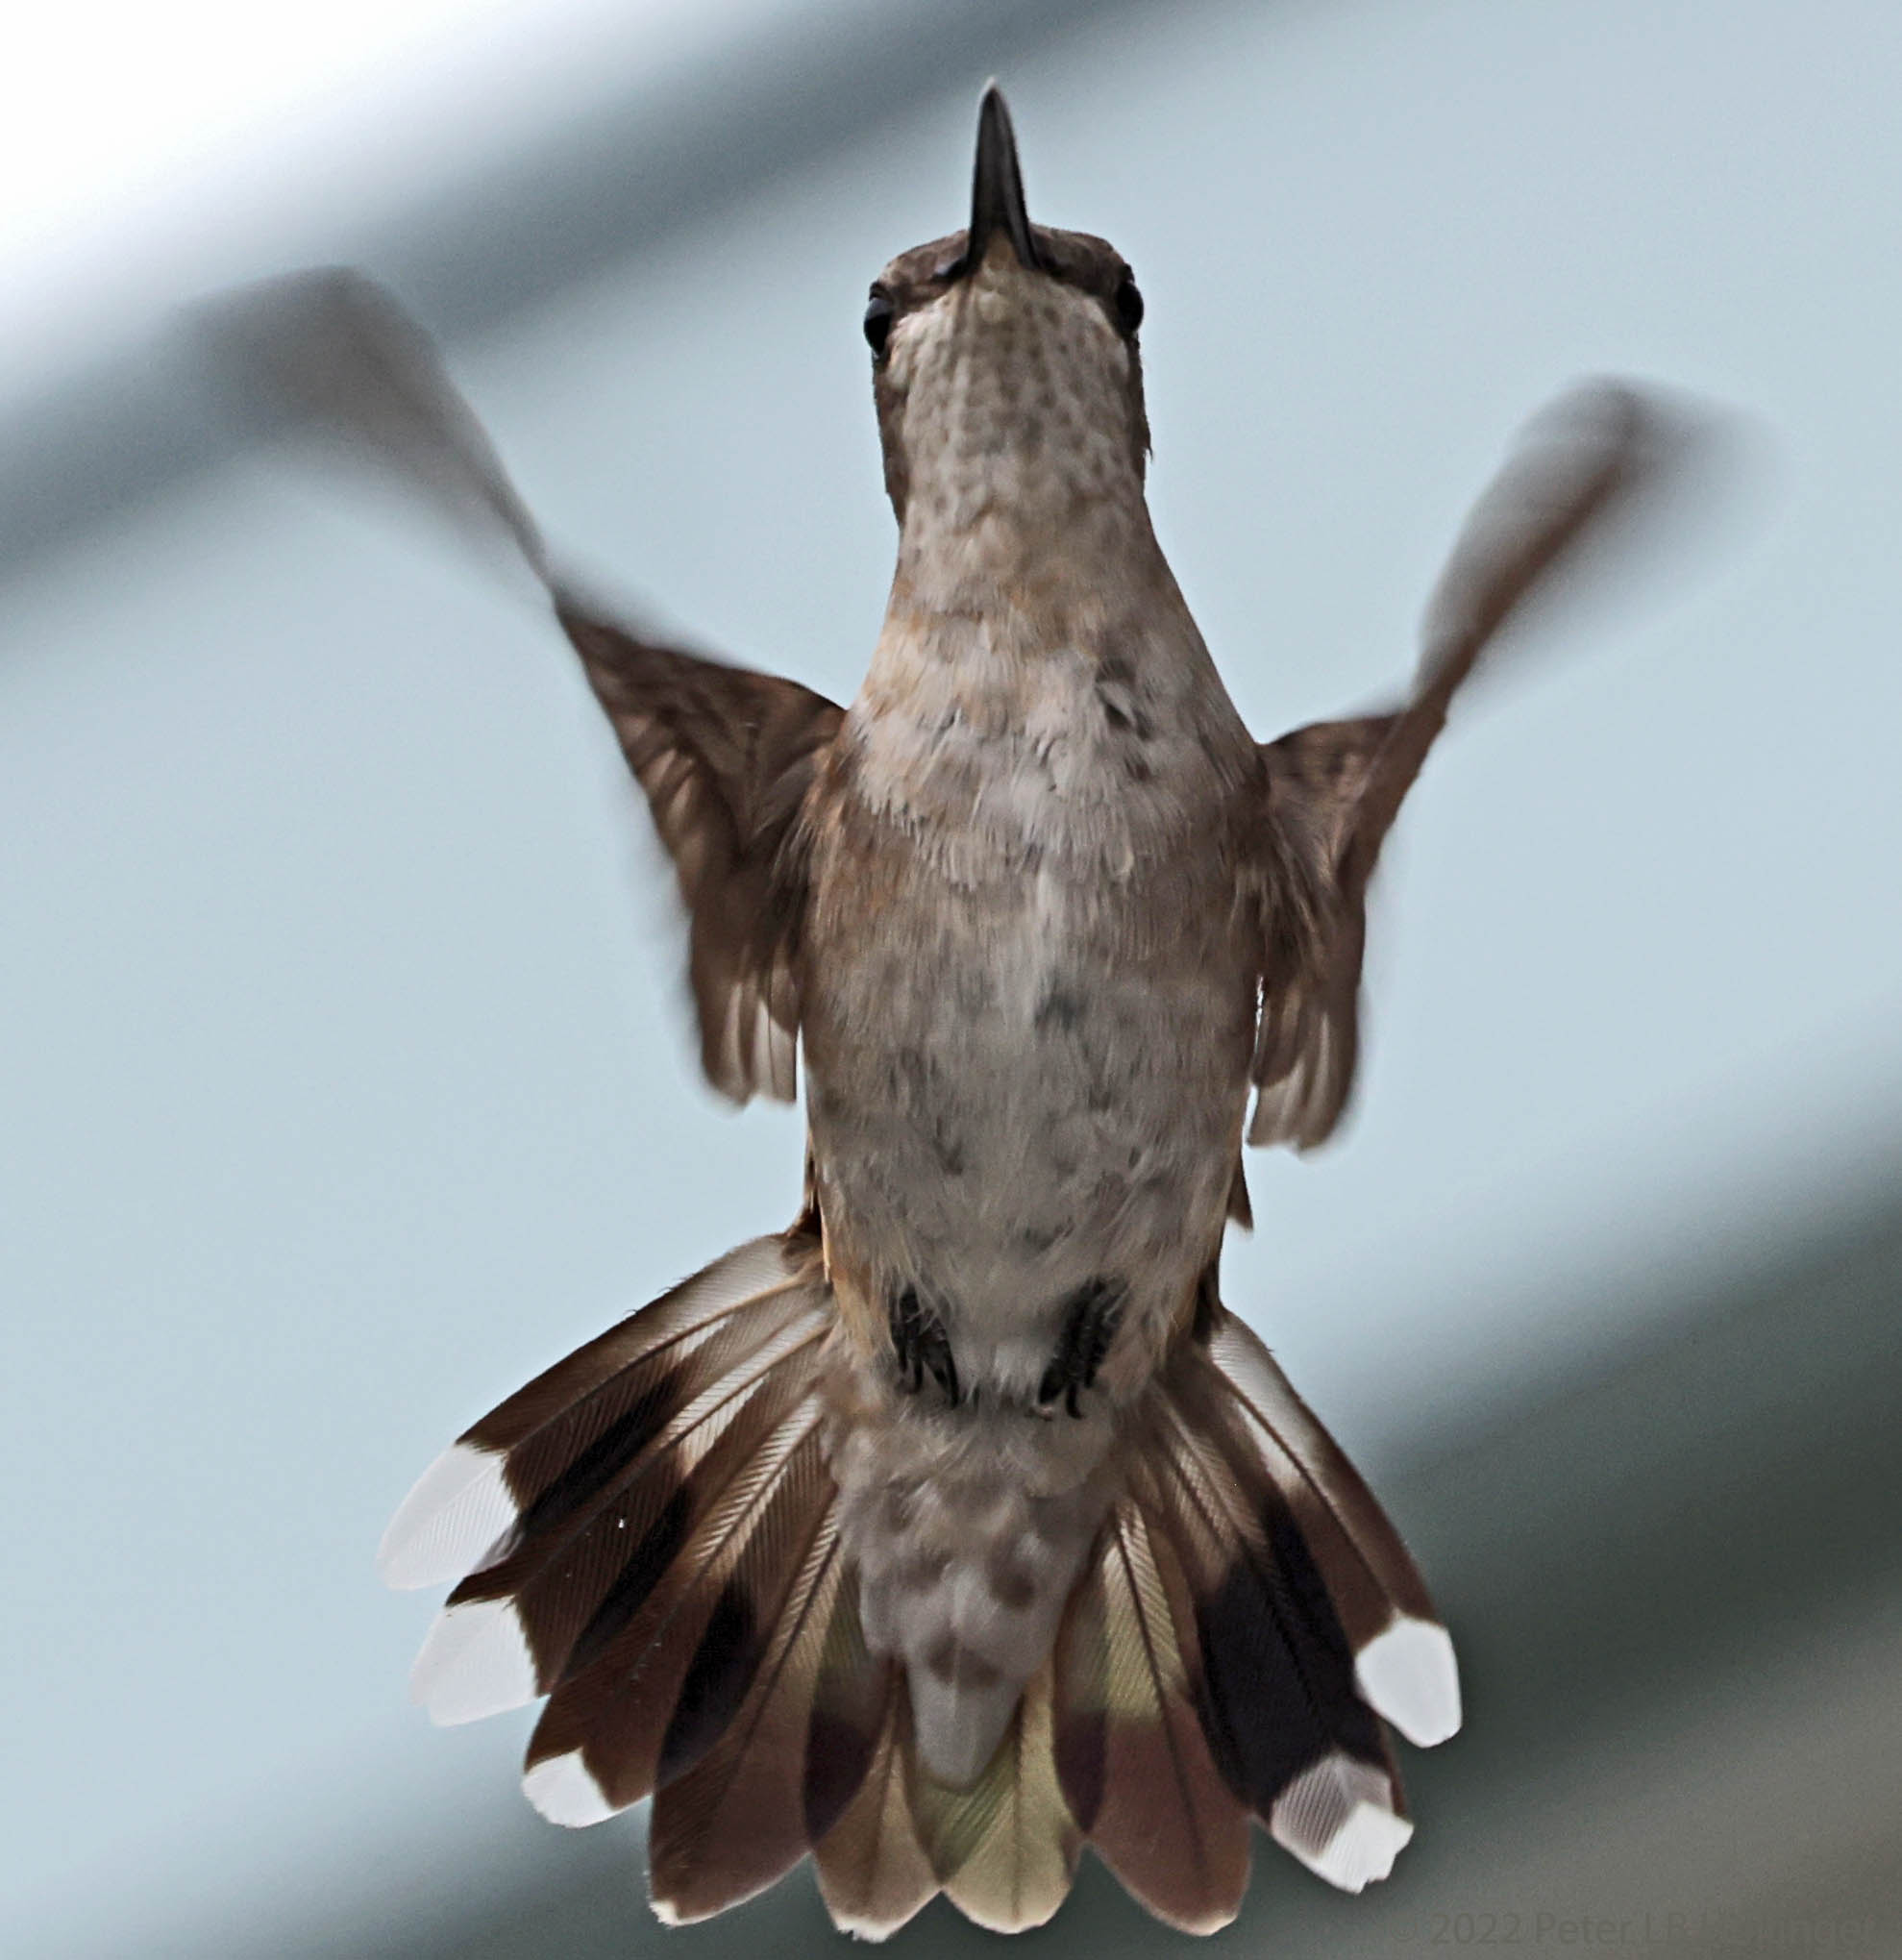 young hummingbird guards its nectar